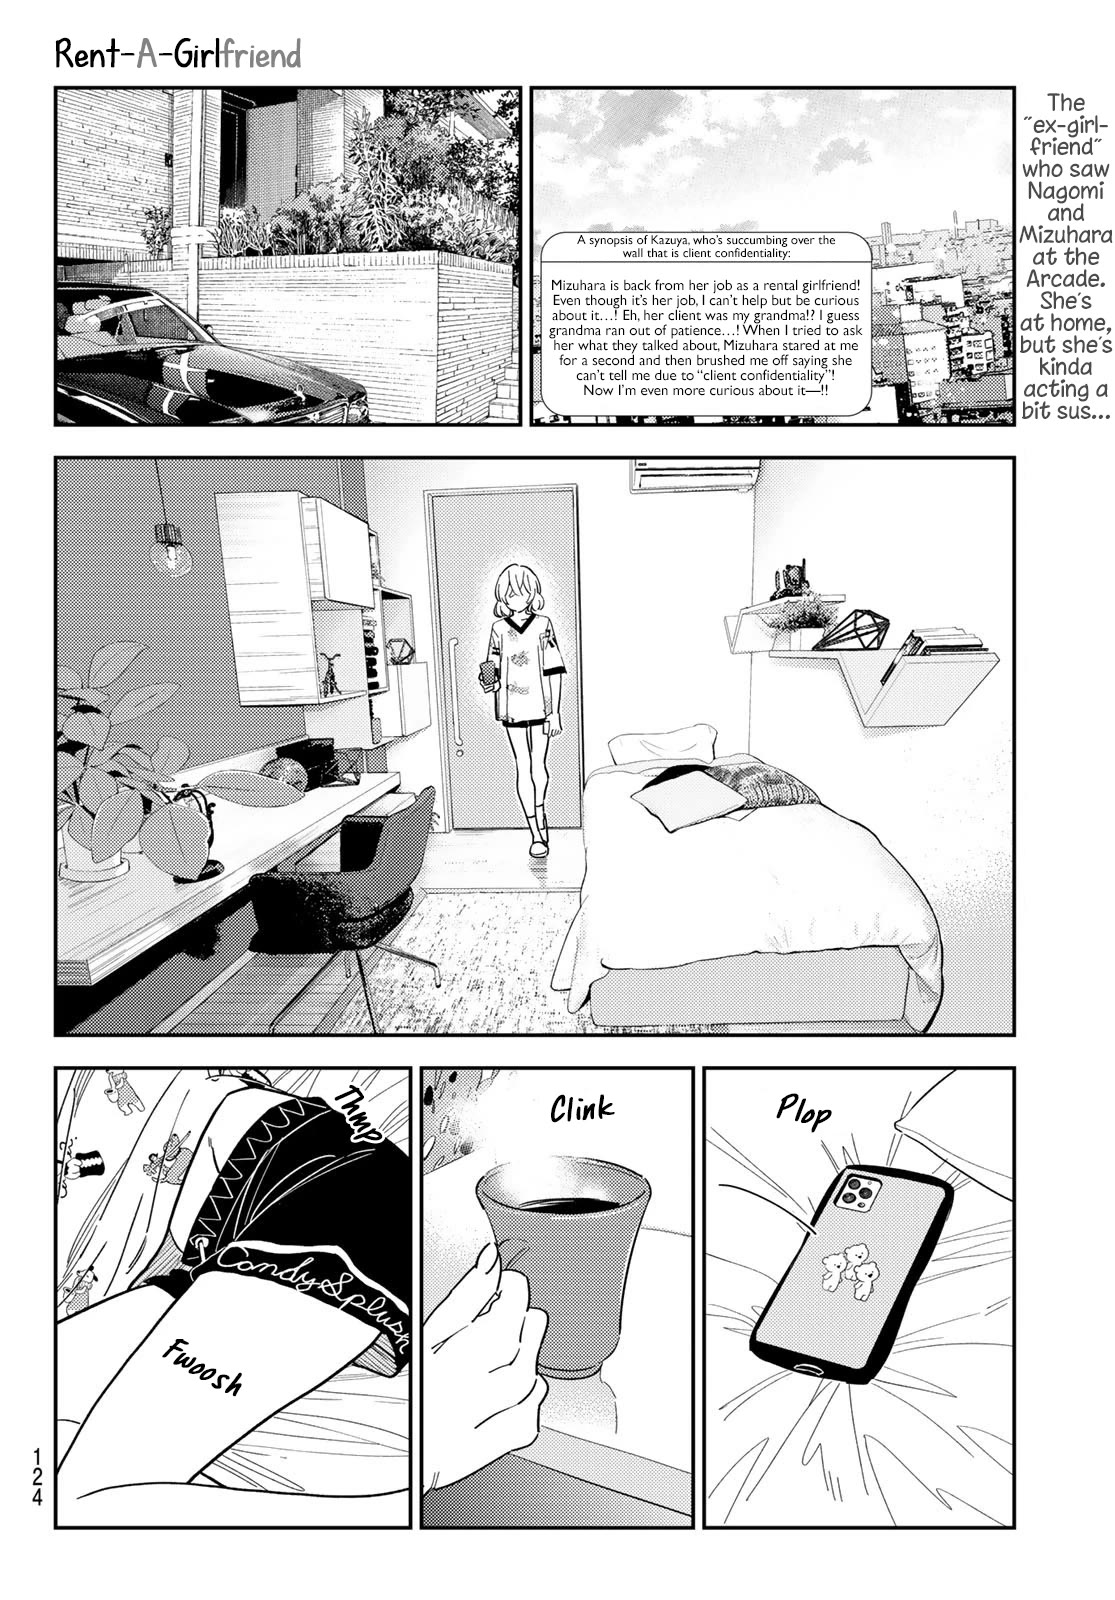 Read Kanojo, Okarishimasu Manga Chapter 261 in English Free Online